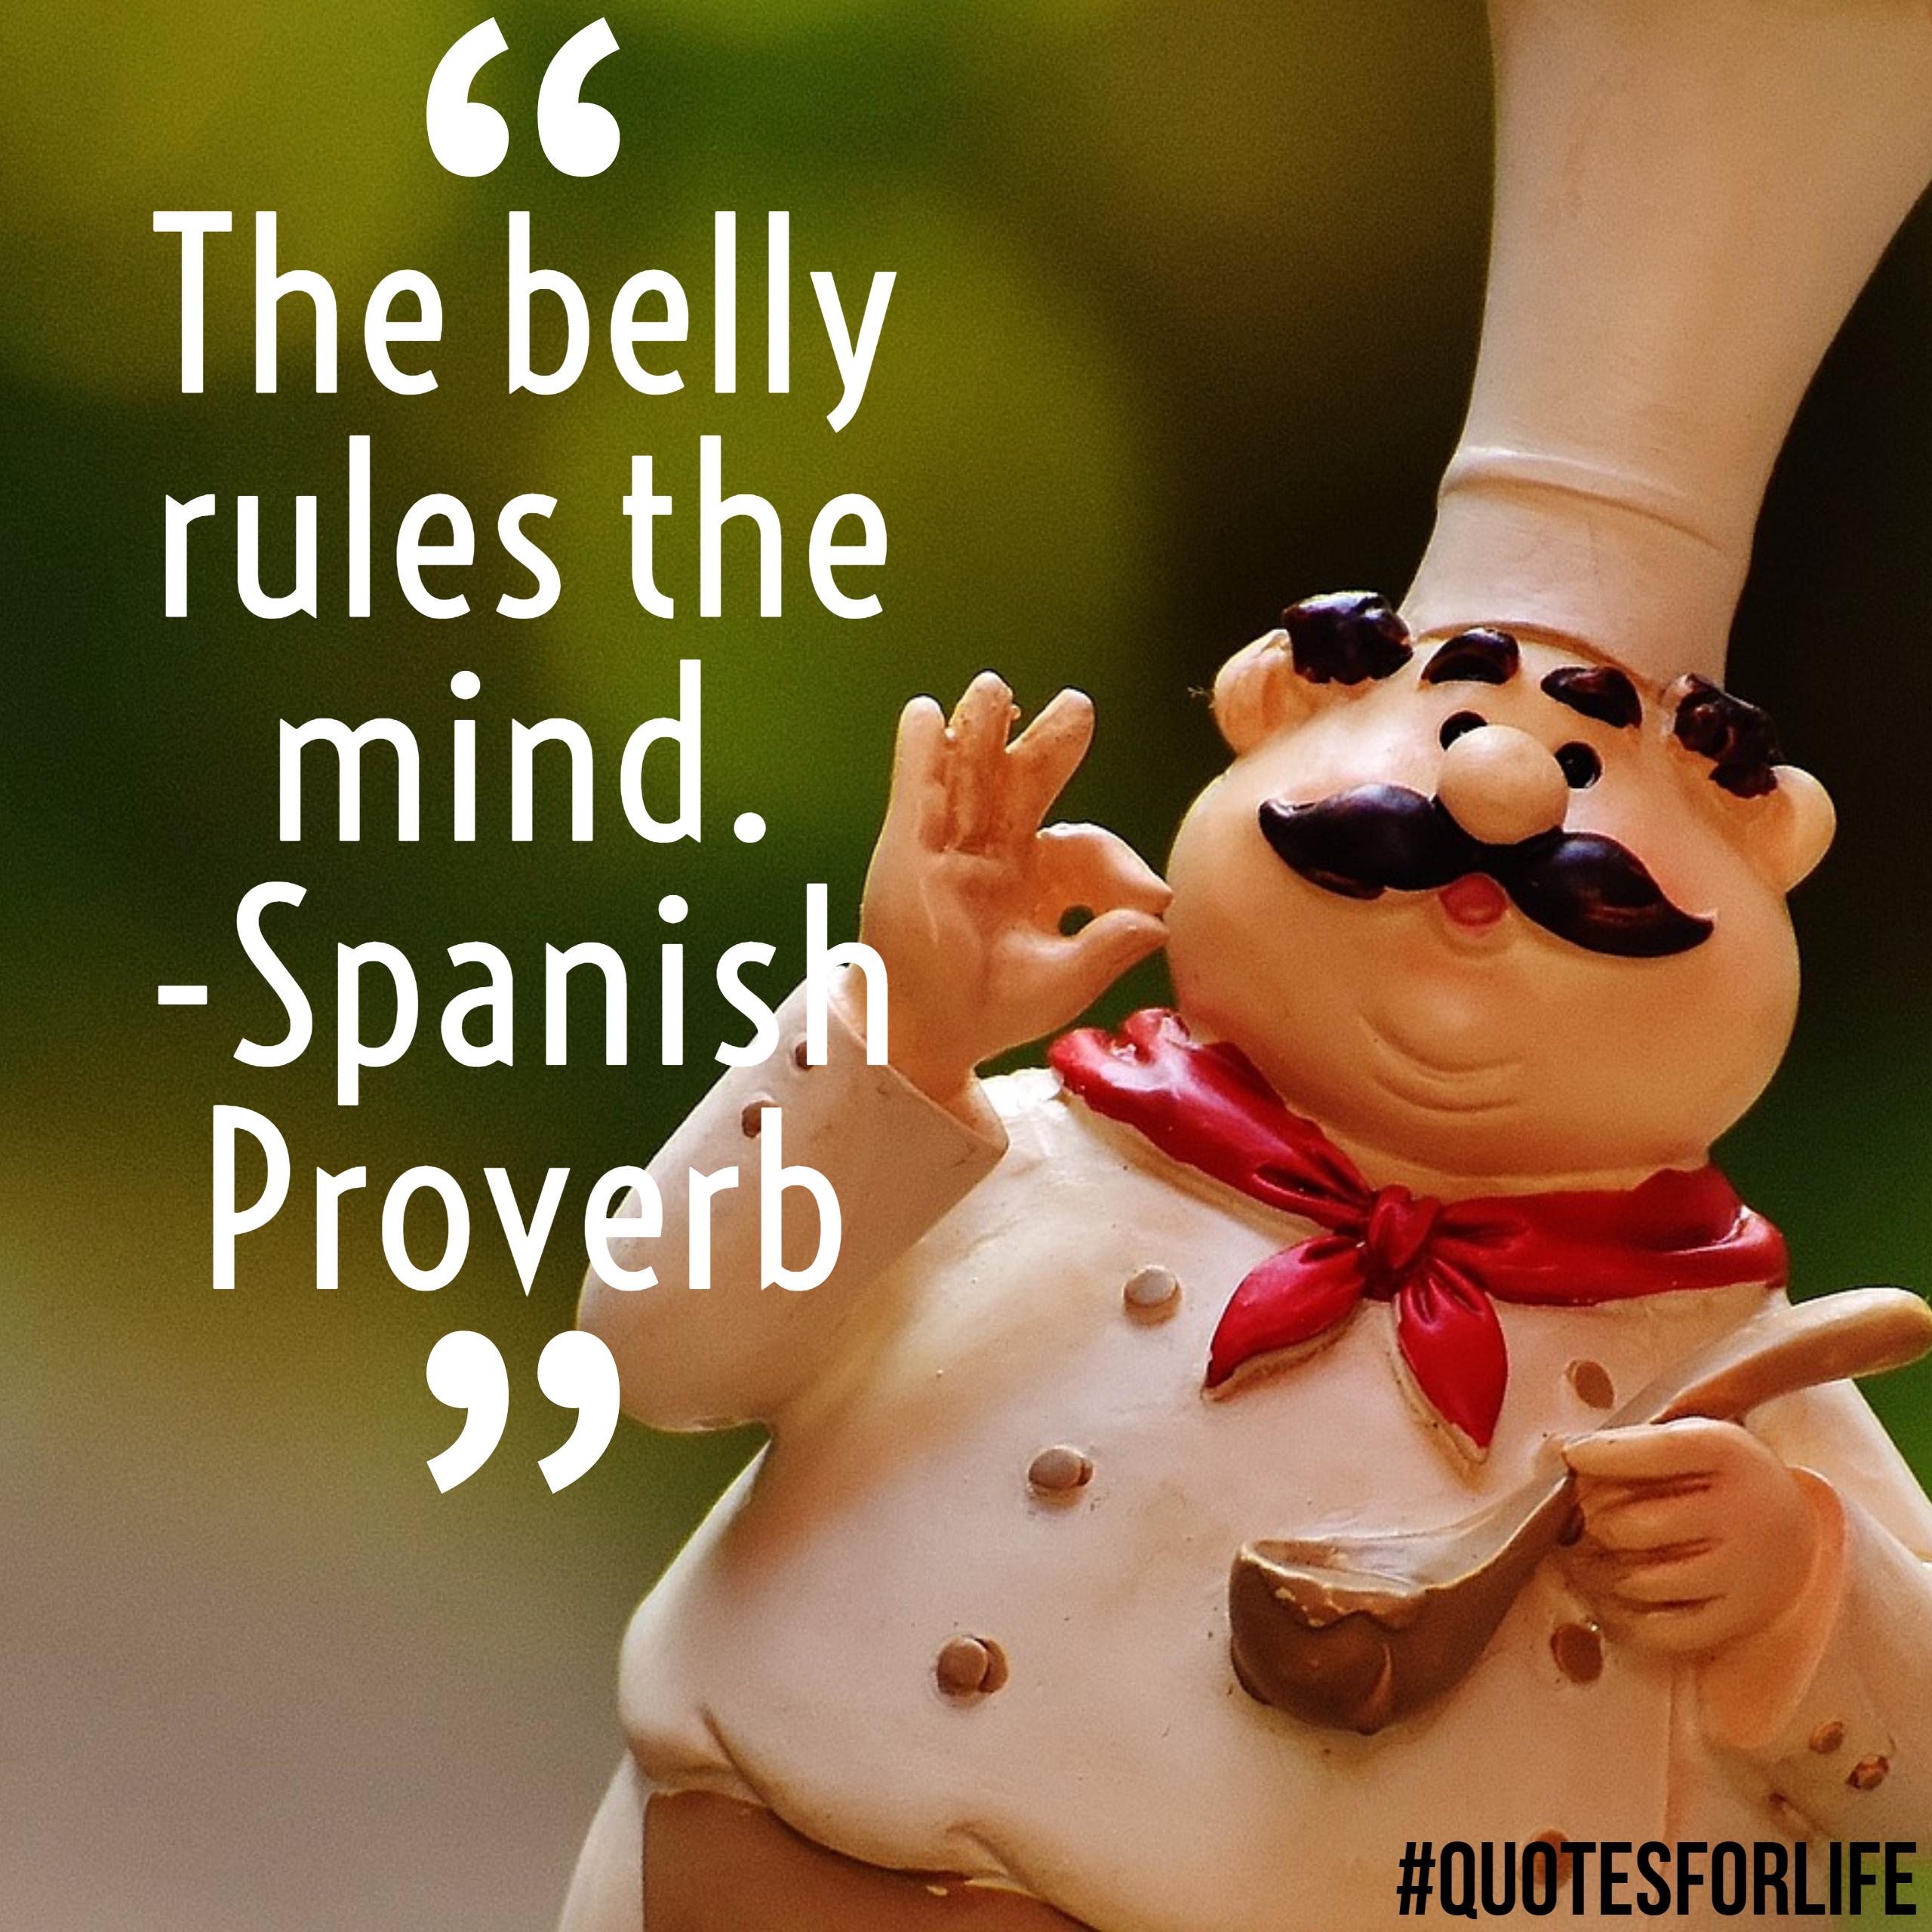 Spanish Proverb